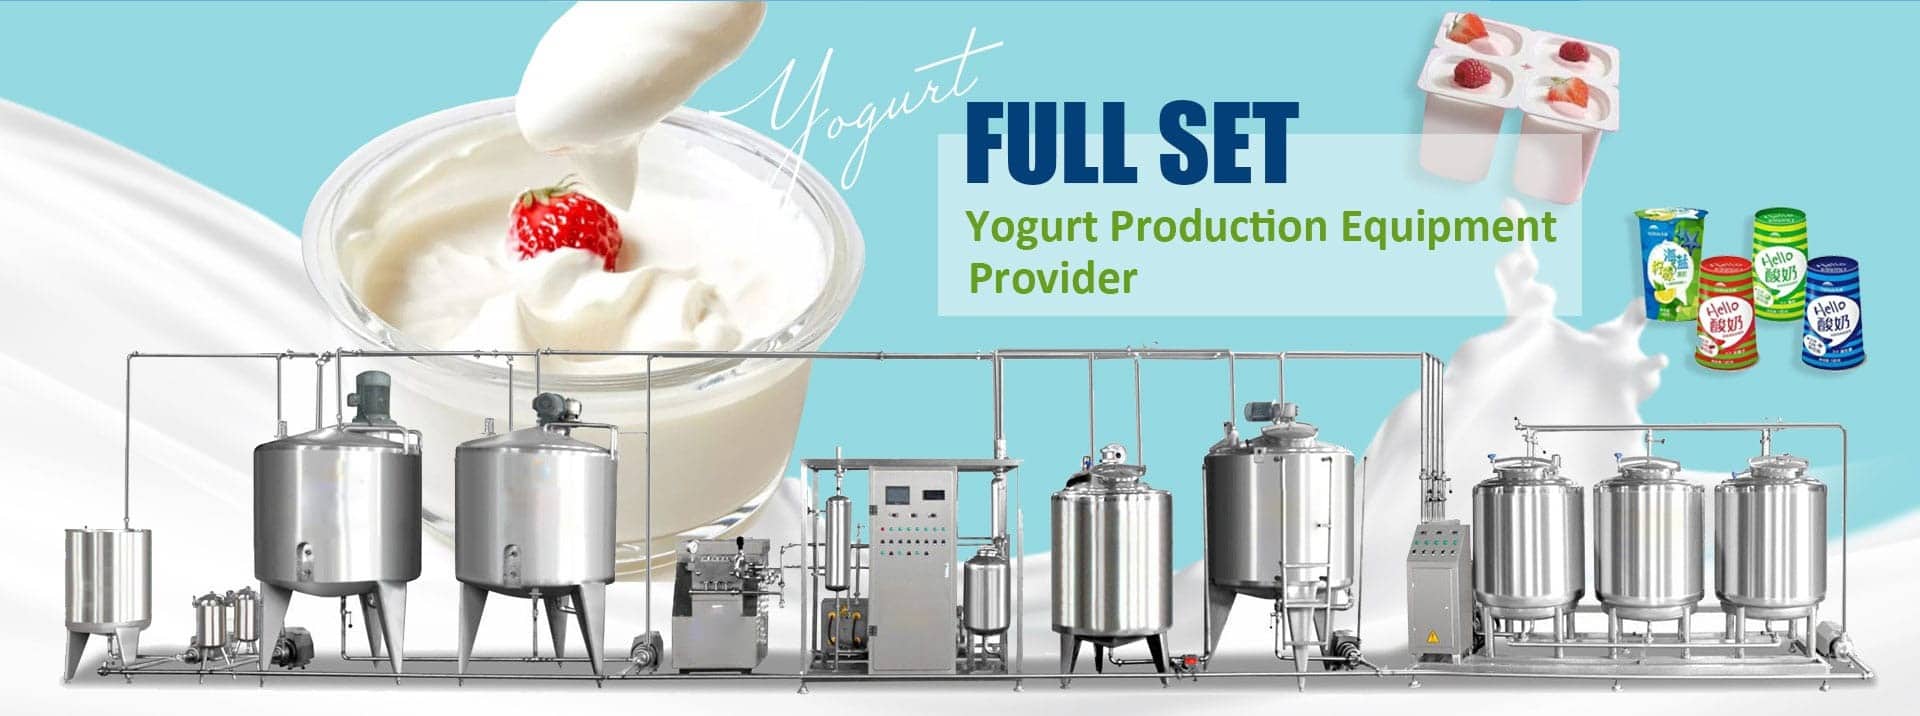 Full set of the yogurt production line